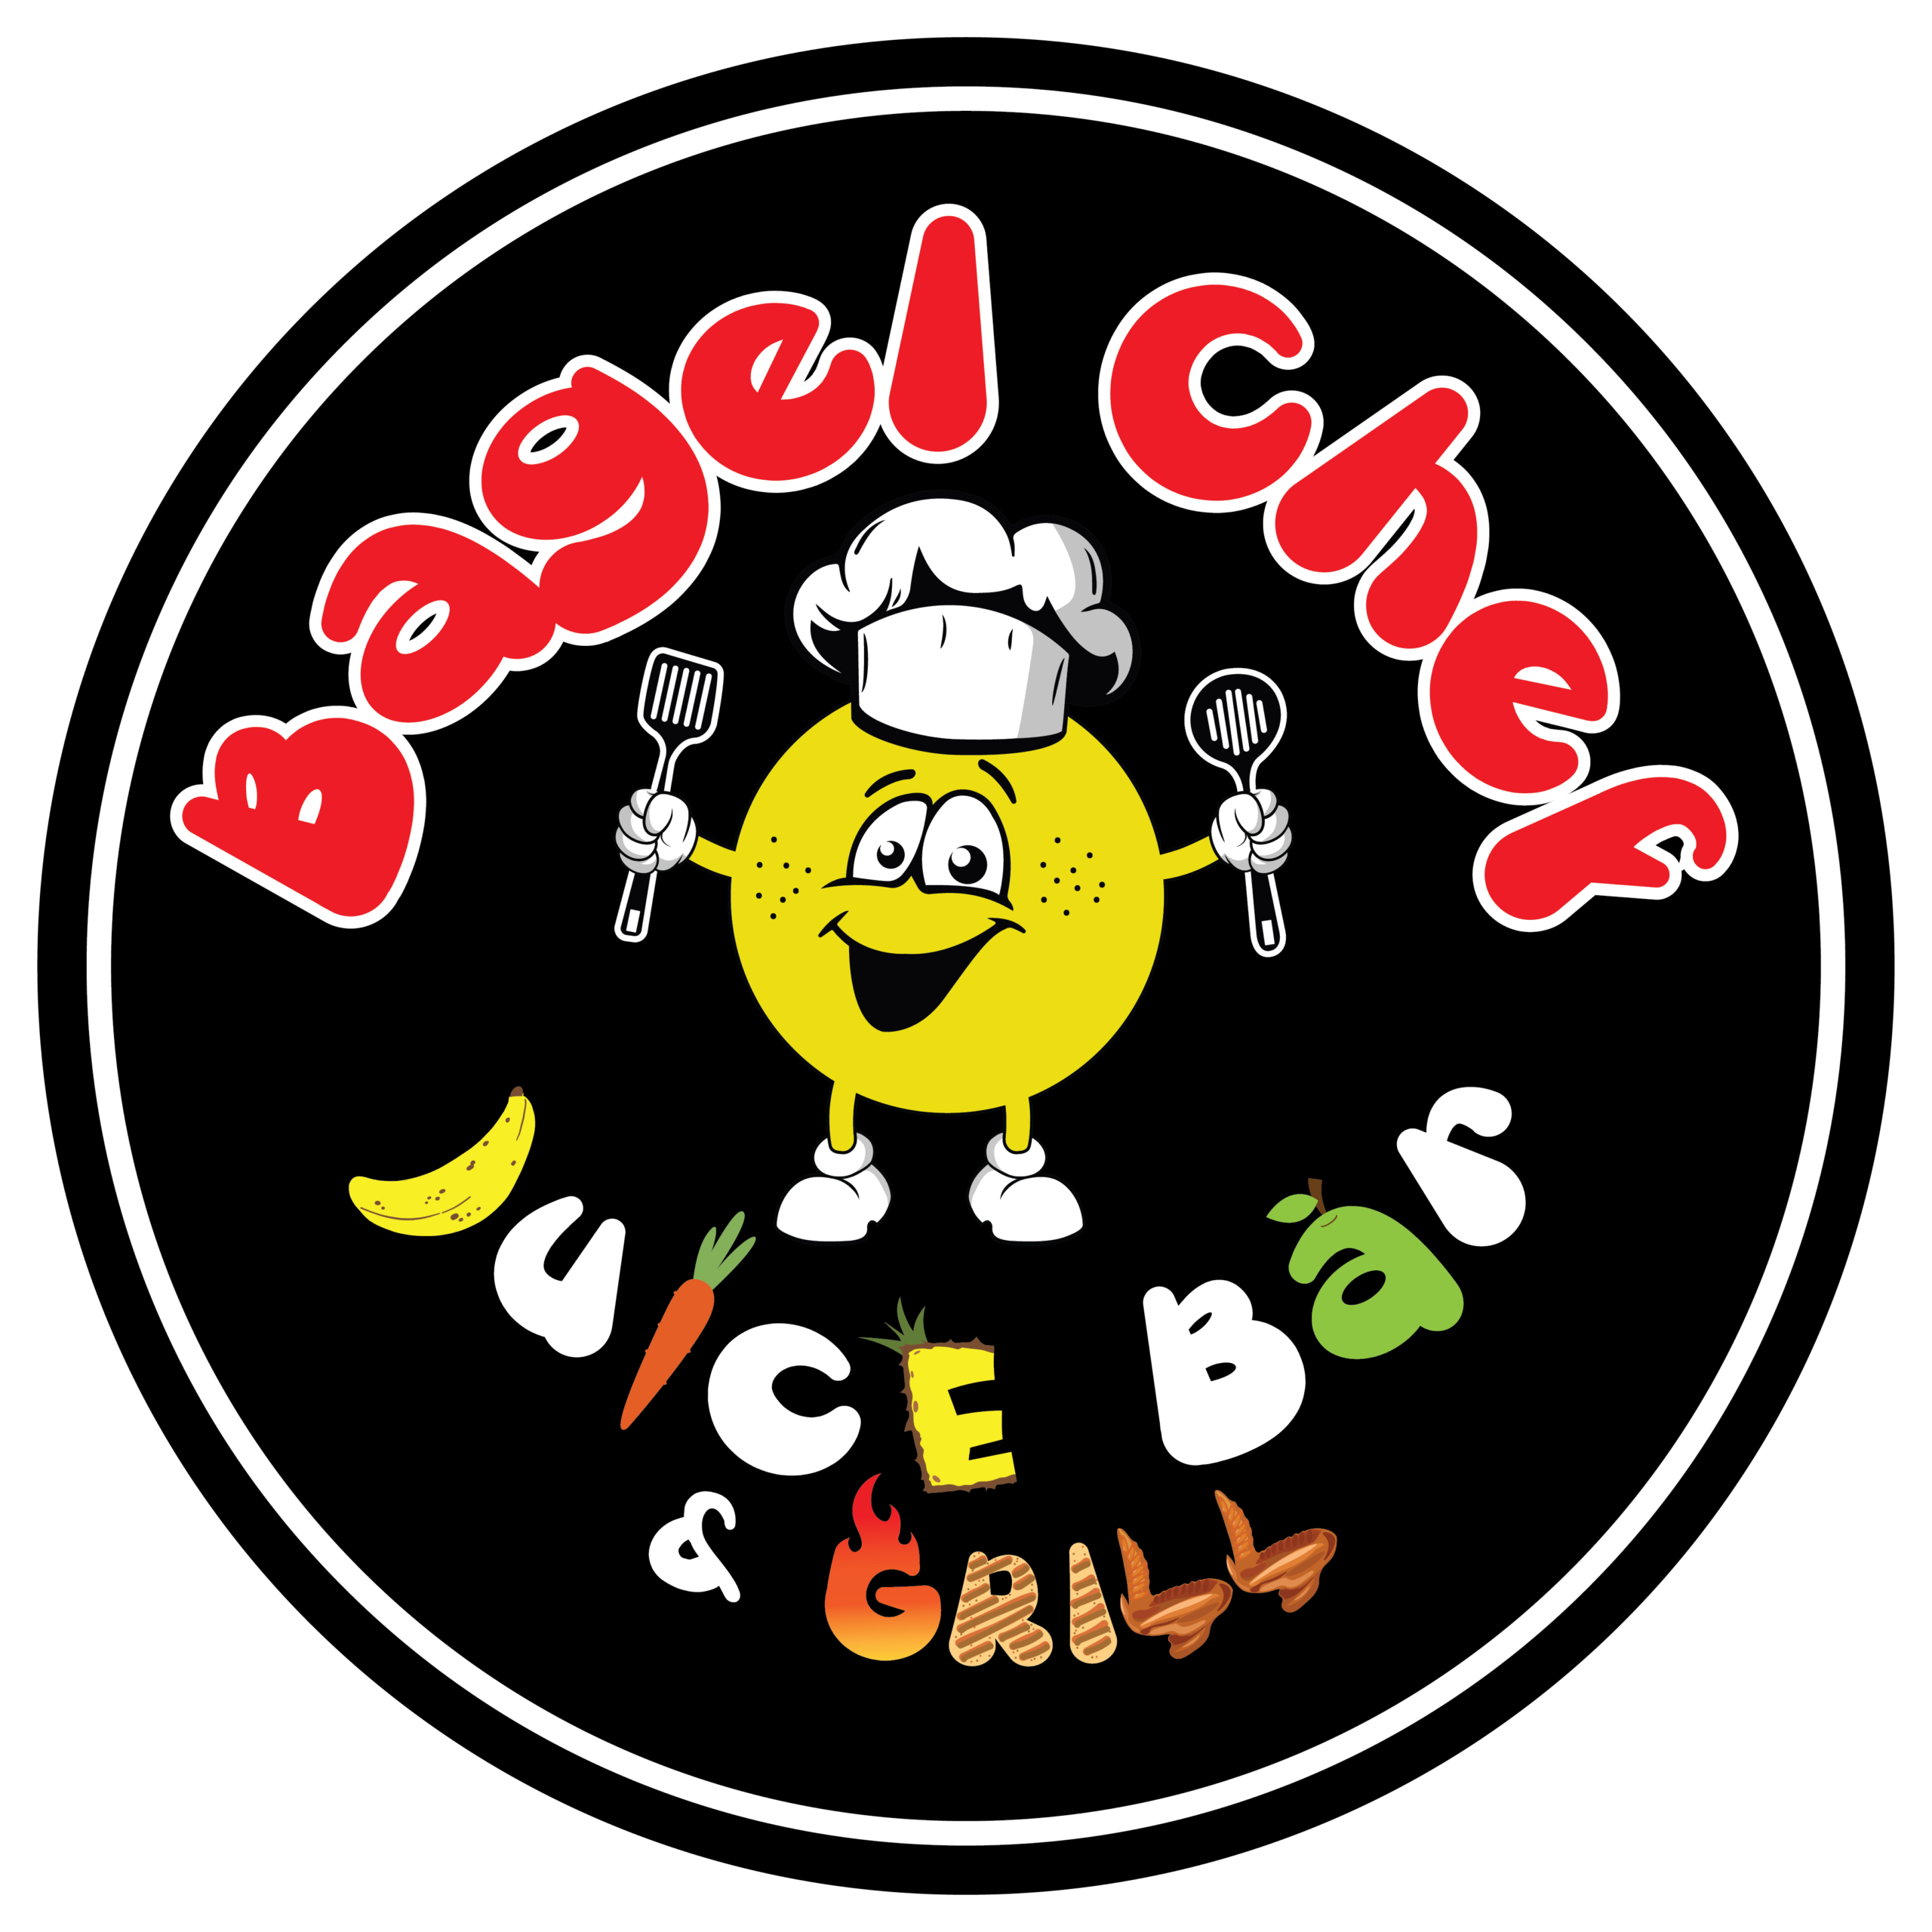 Bagel Chef - Bagel Shop, Juice Bar & Grill